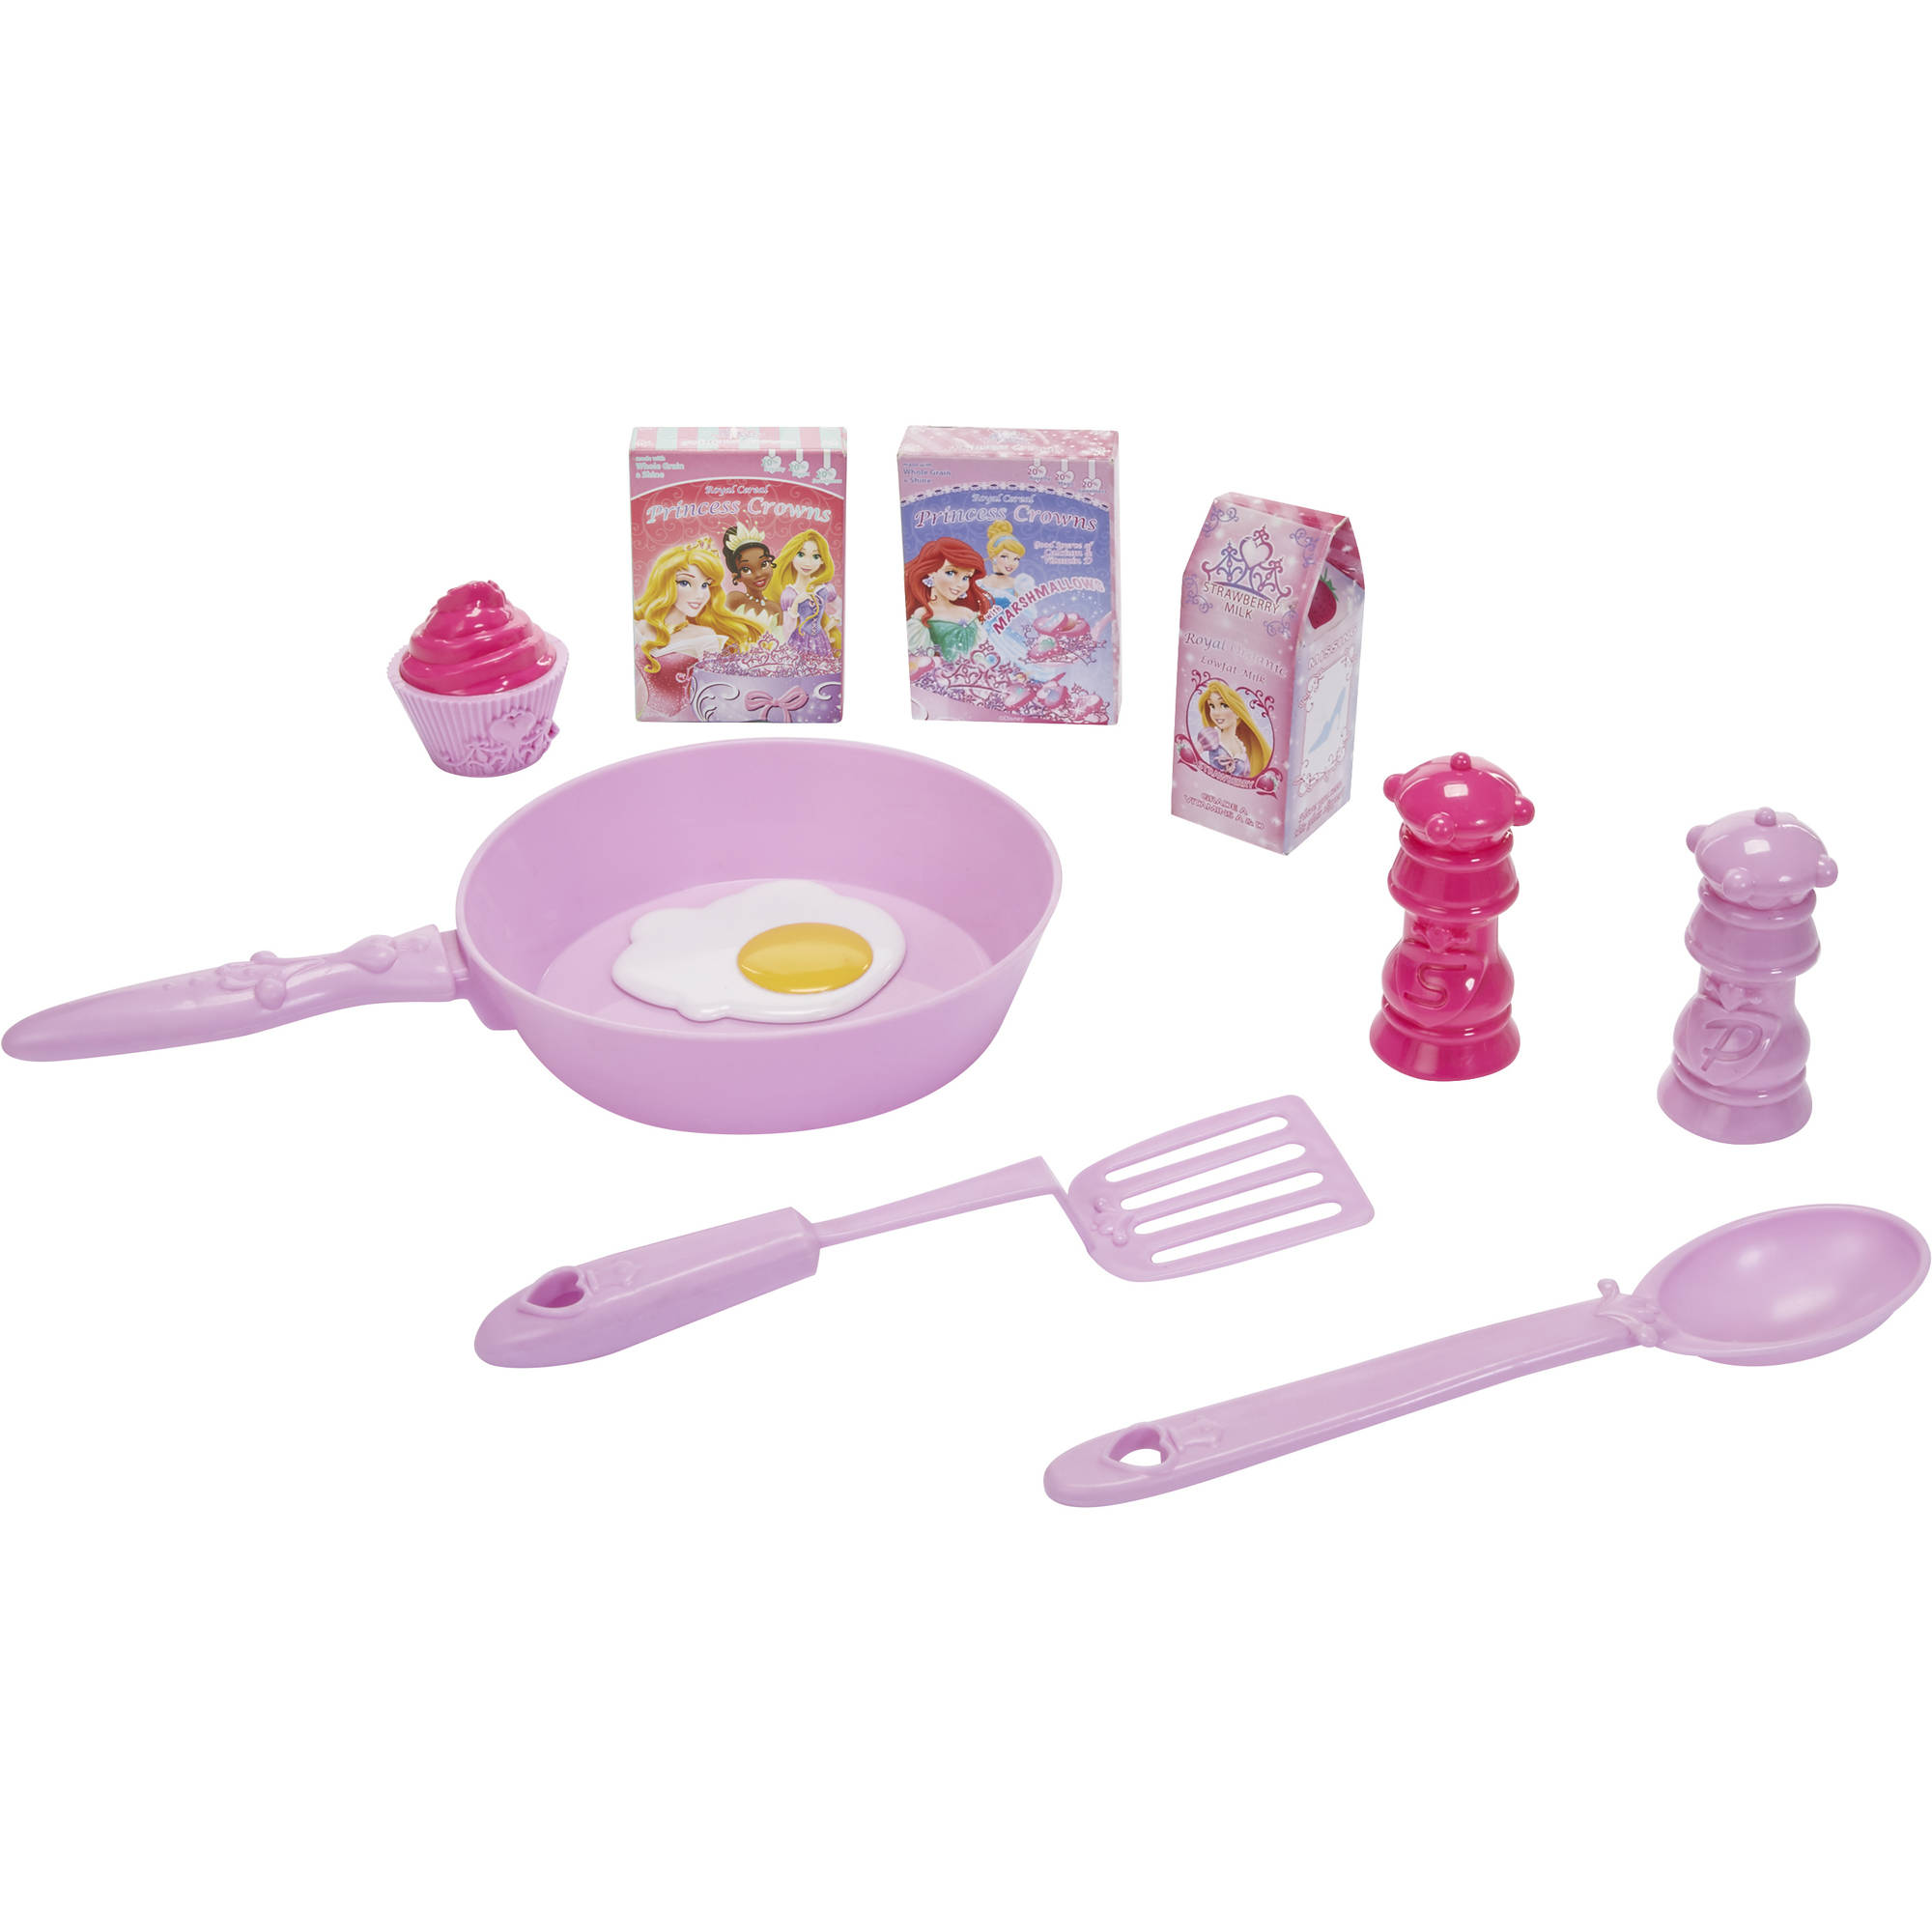 Disney Princess Magical Play Kitchen - image 3 of 5